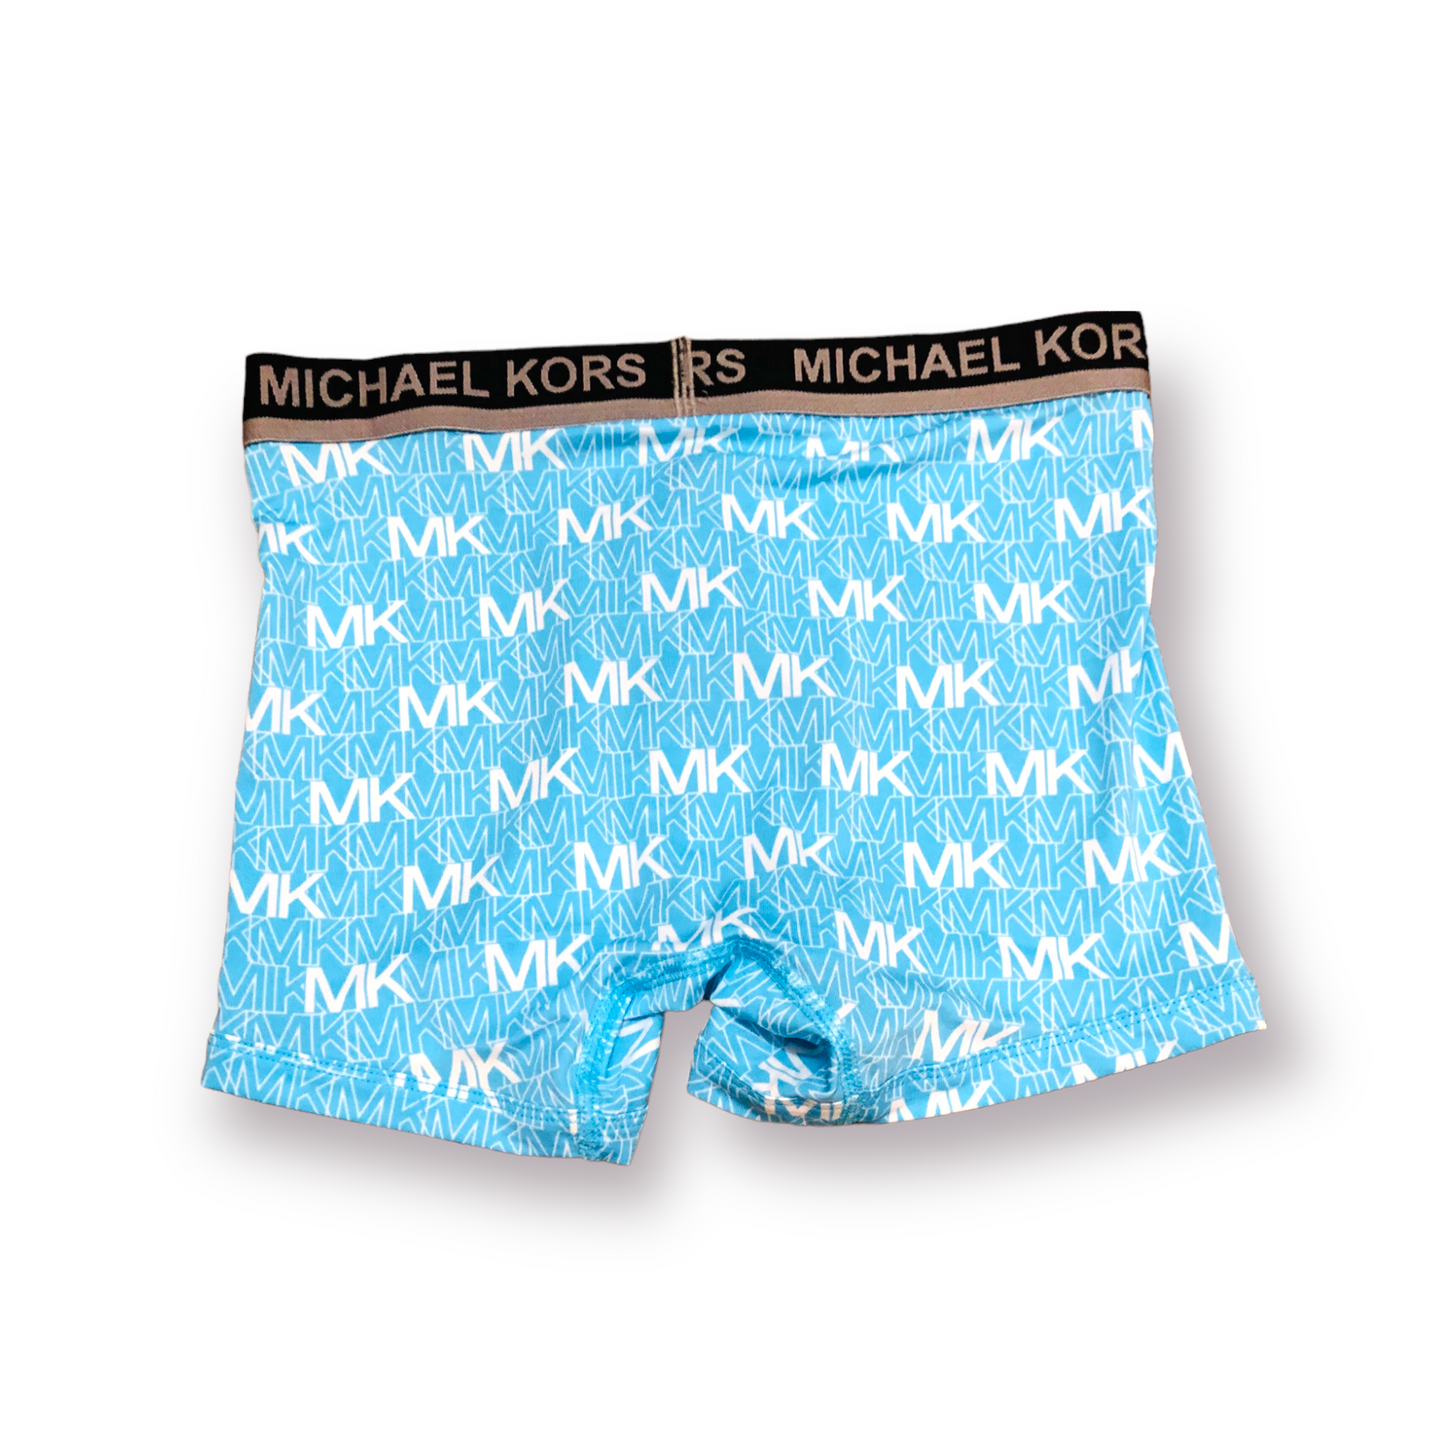 Michael Kors Men's Signature Logo Boxer Briefs (NWOT)